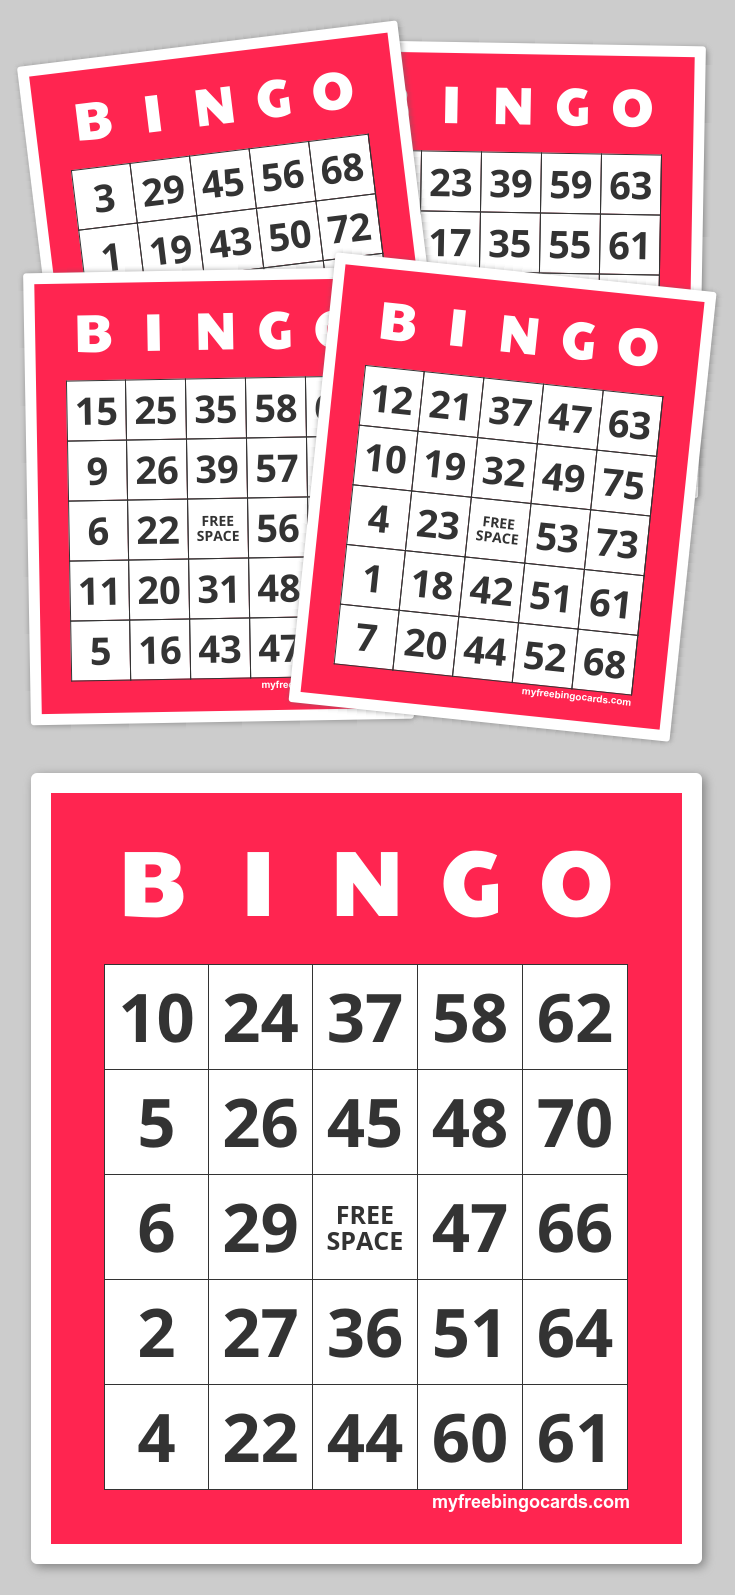 free-classic-bingo